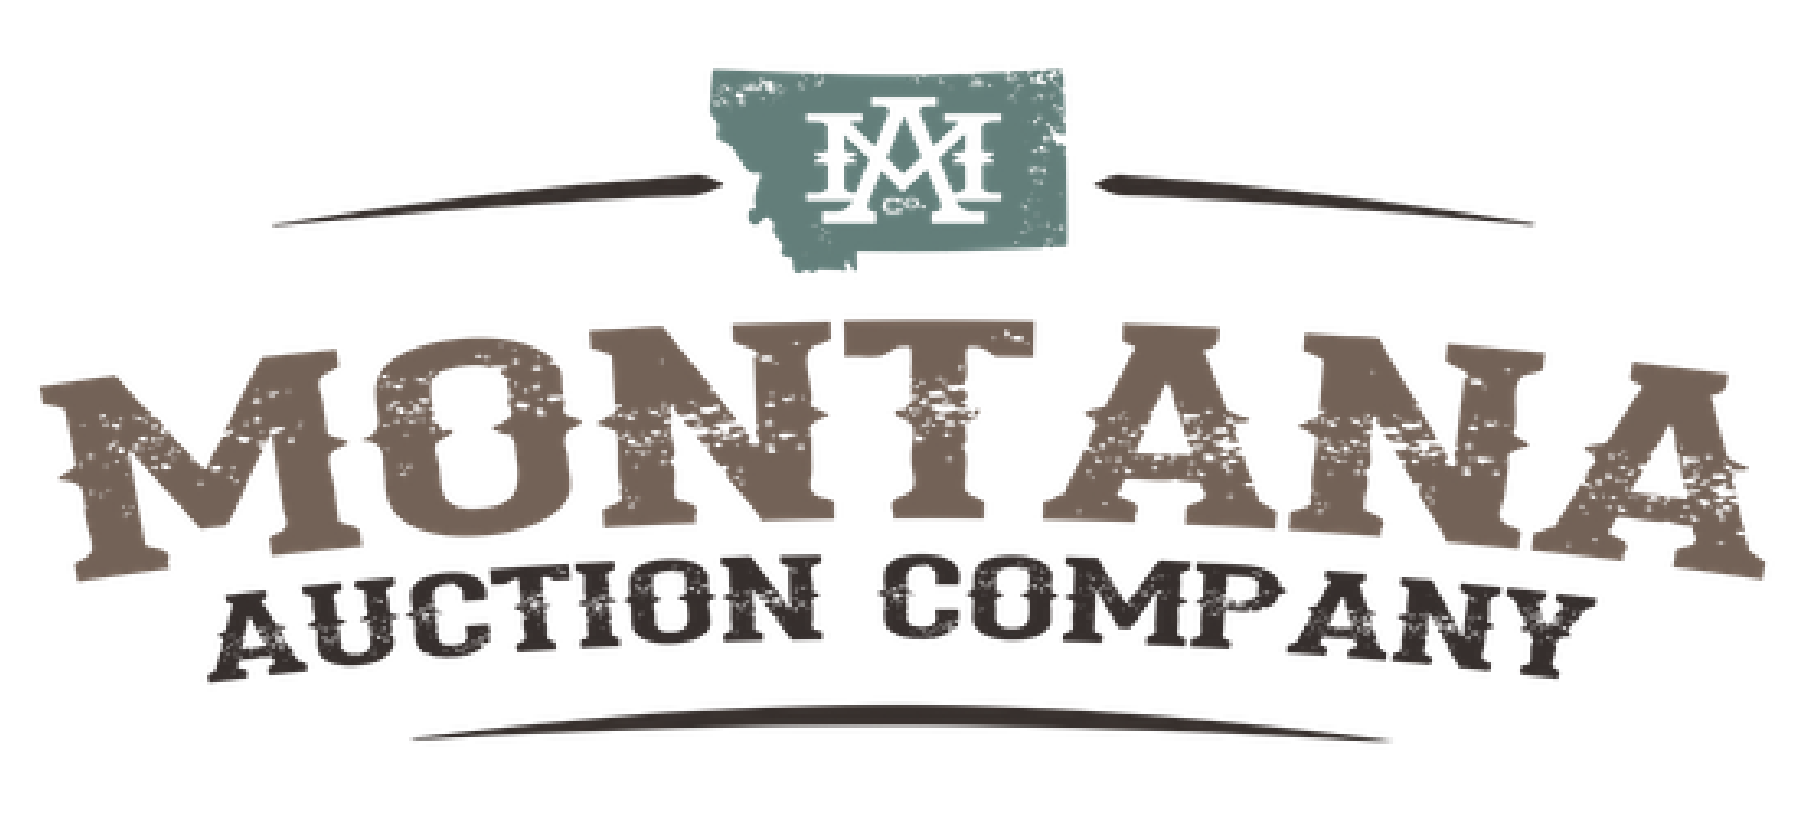 Montana Auction Company | Sidney, MT